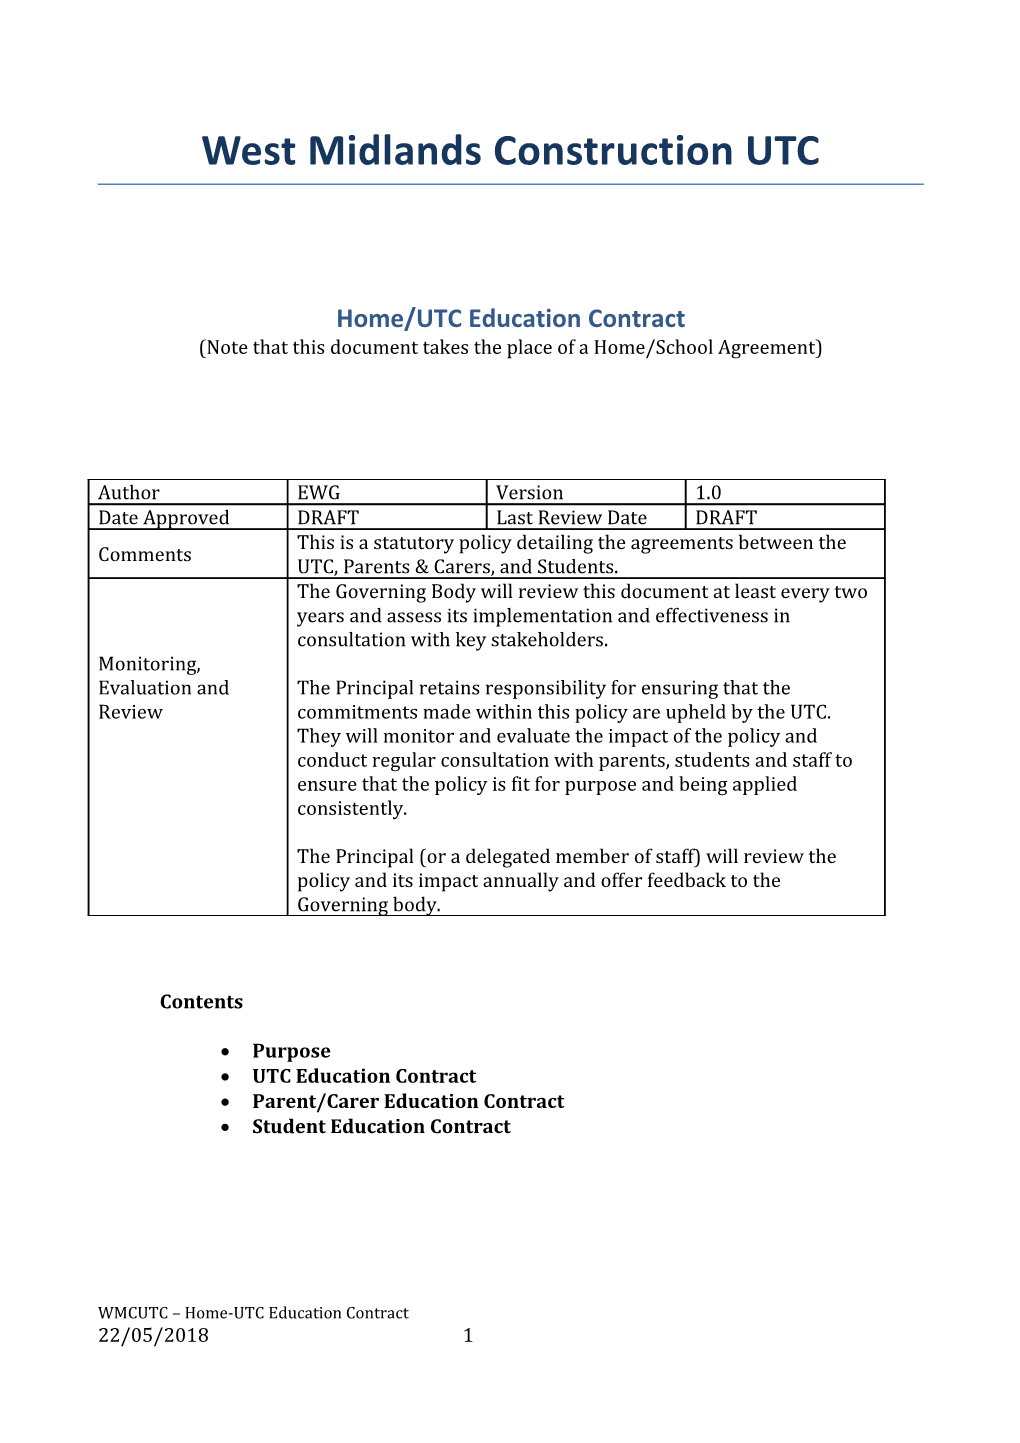 Home/UTC Education Contract